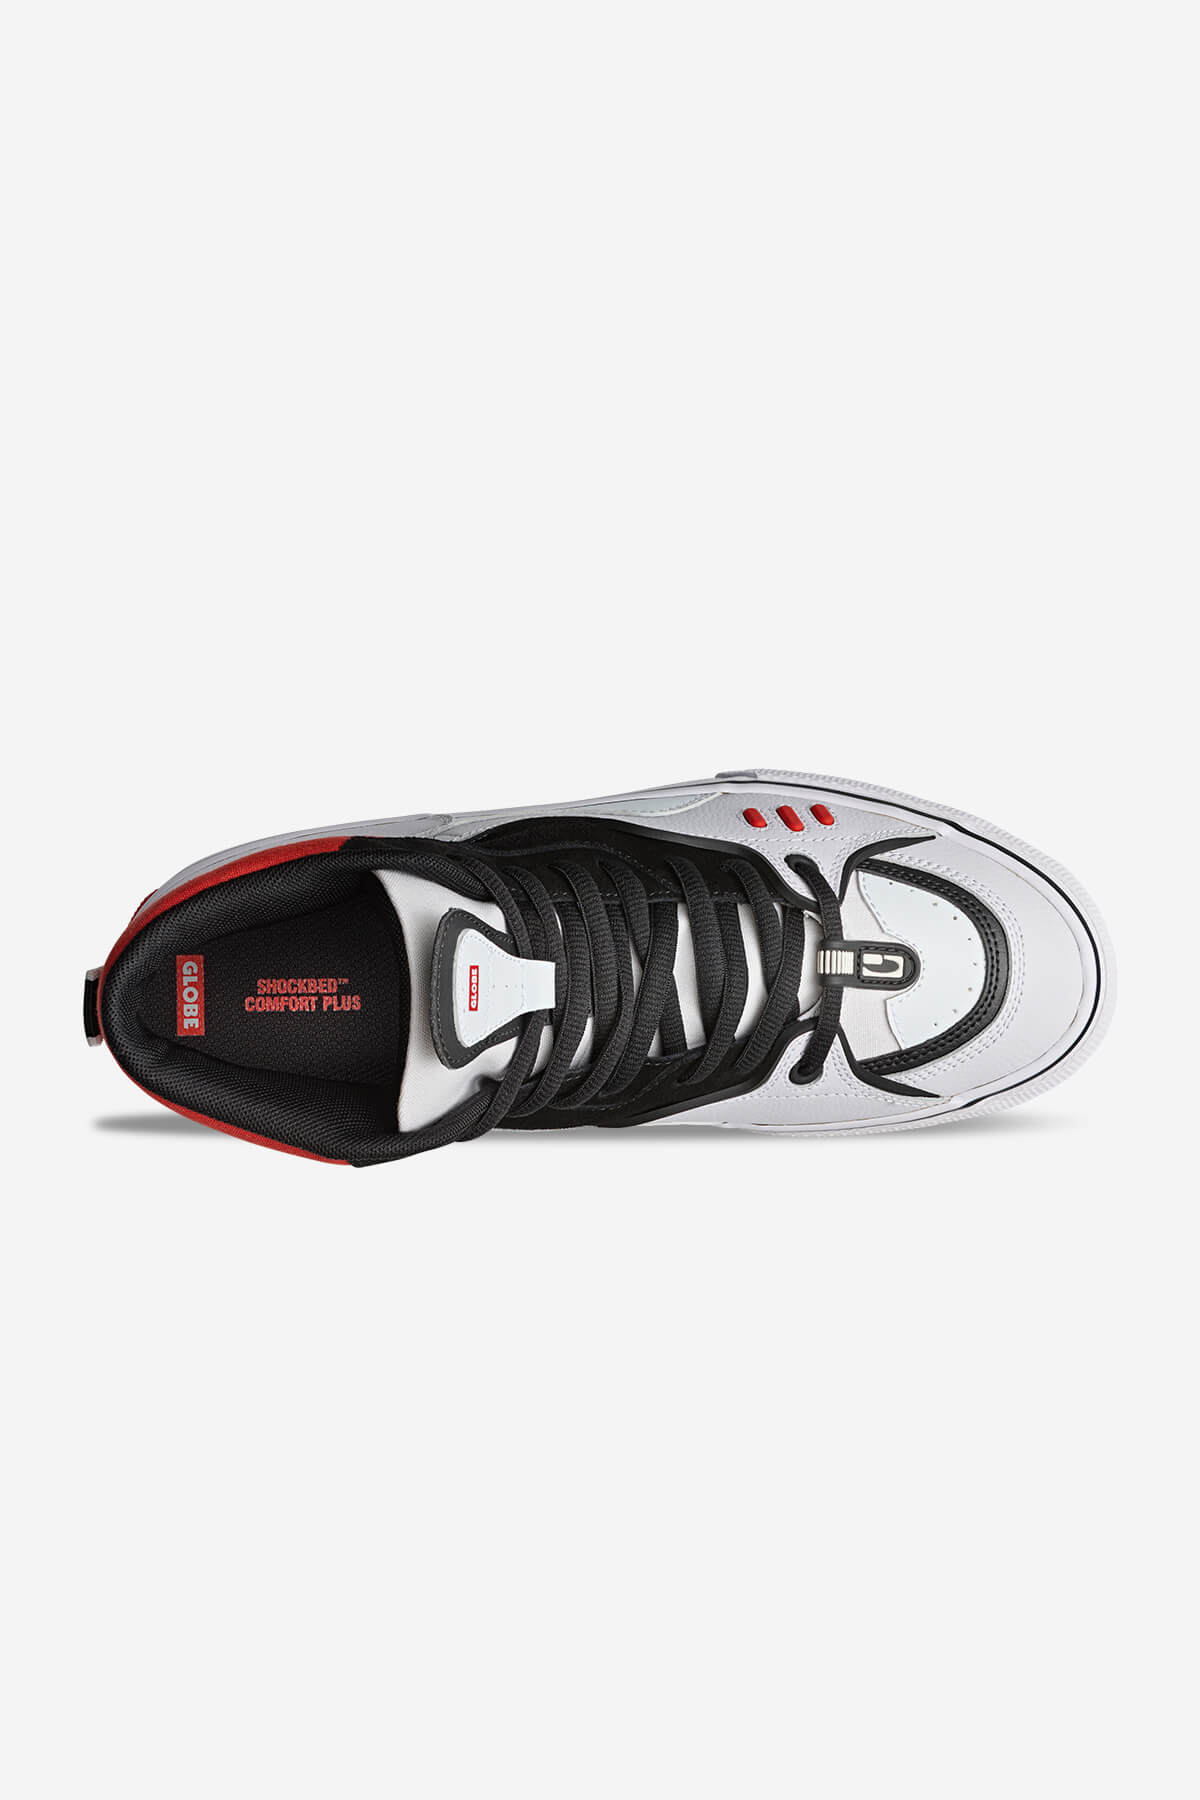 dimension white negro red skateboard  zapatos